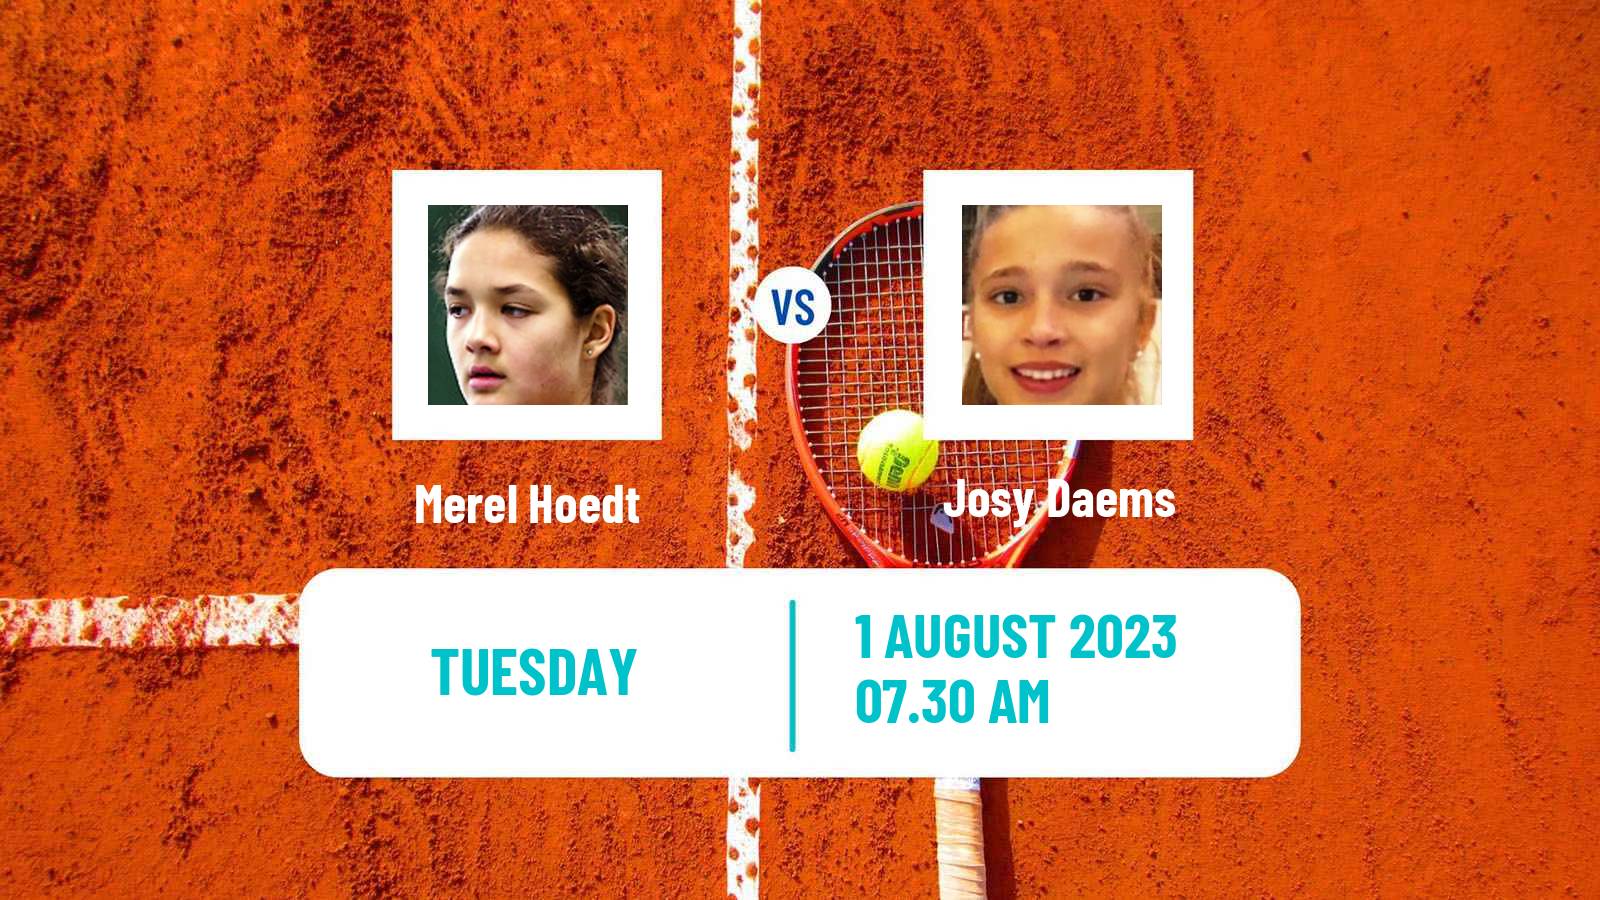 Tennis ITF W15 Eindhoven Women Merel Hoedt - Josy Daems